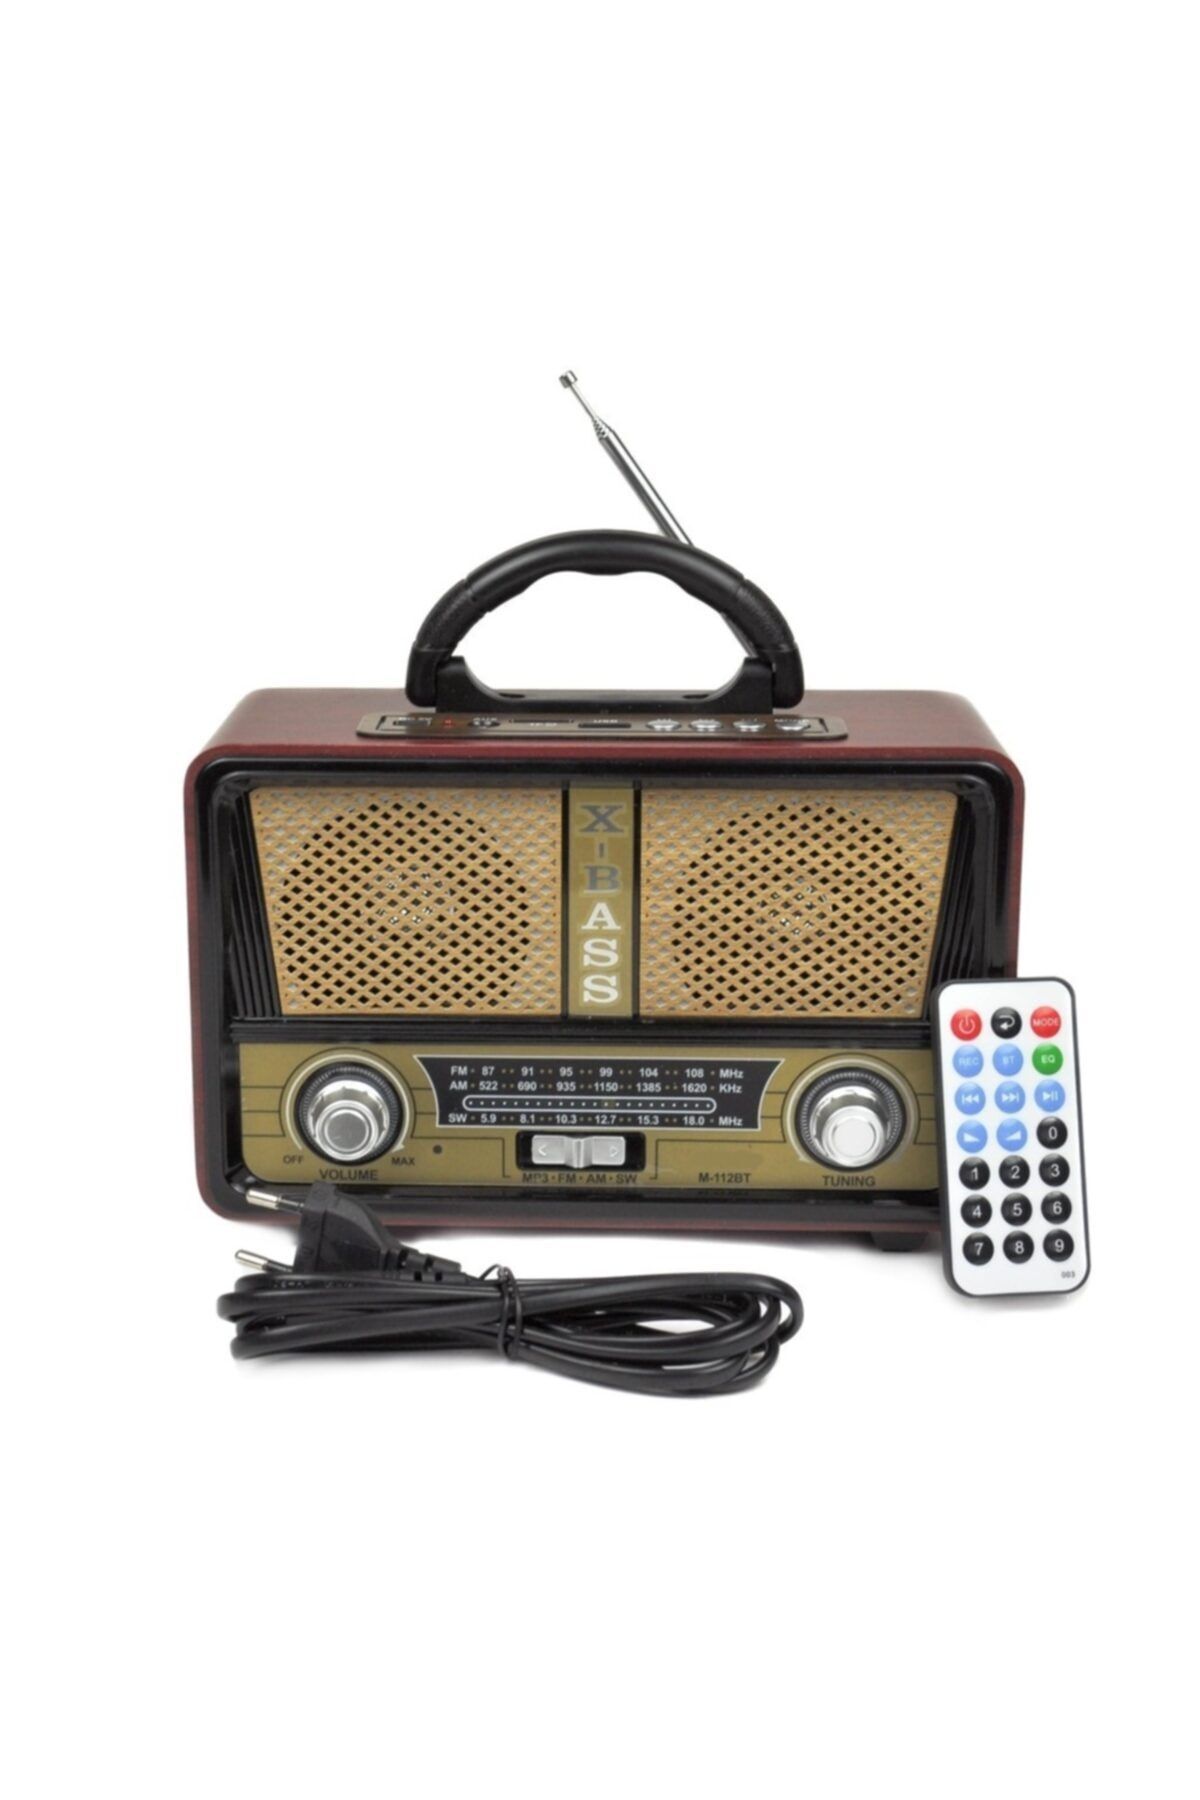 Tastech Meier M-112bt Şarjlı Nostaljik Bluetooth Fm Radyo Usb/sd/mp3 105013